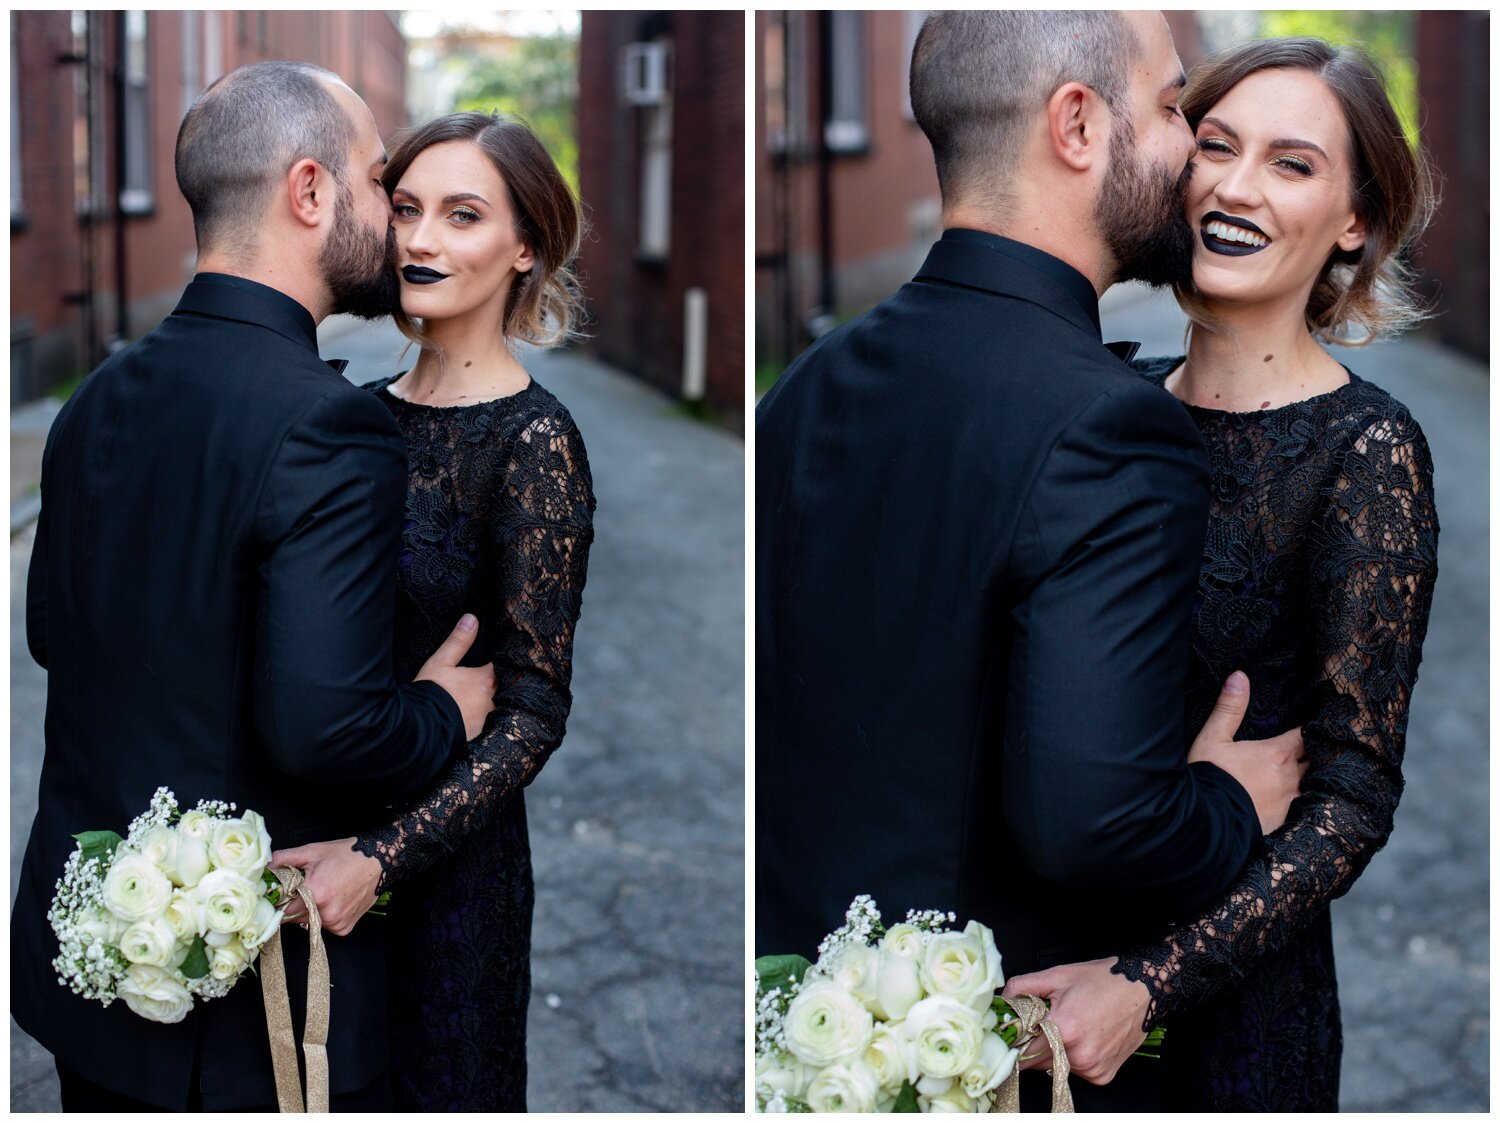 Kate-Alison-Photography-Salem-MA-Halloween-Black-Elopement-Wedding-Inspiration-7.jpg